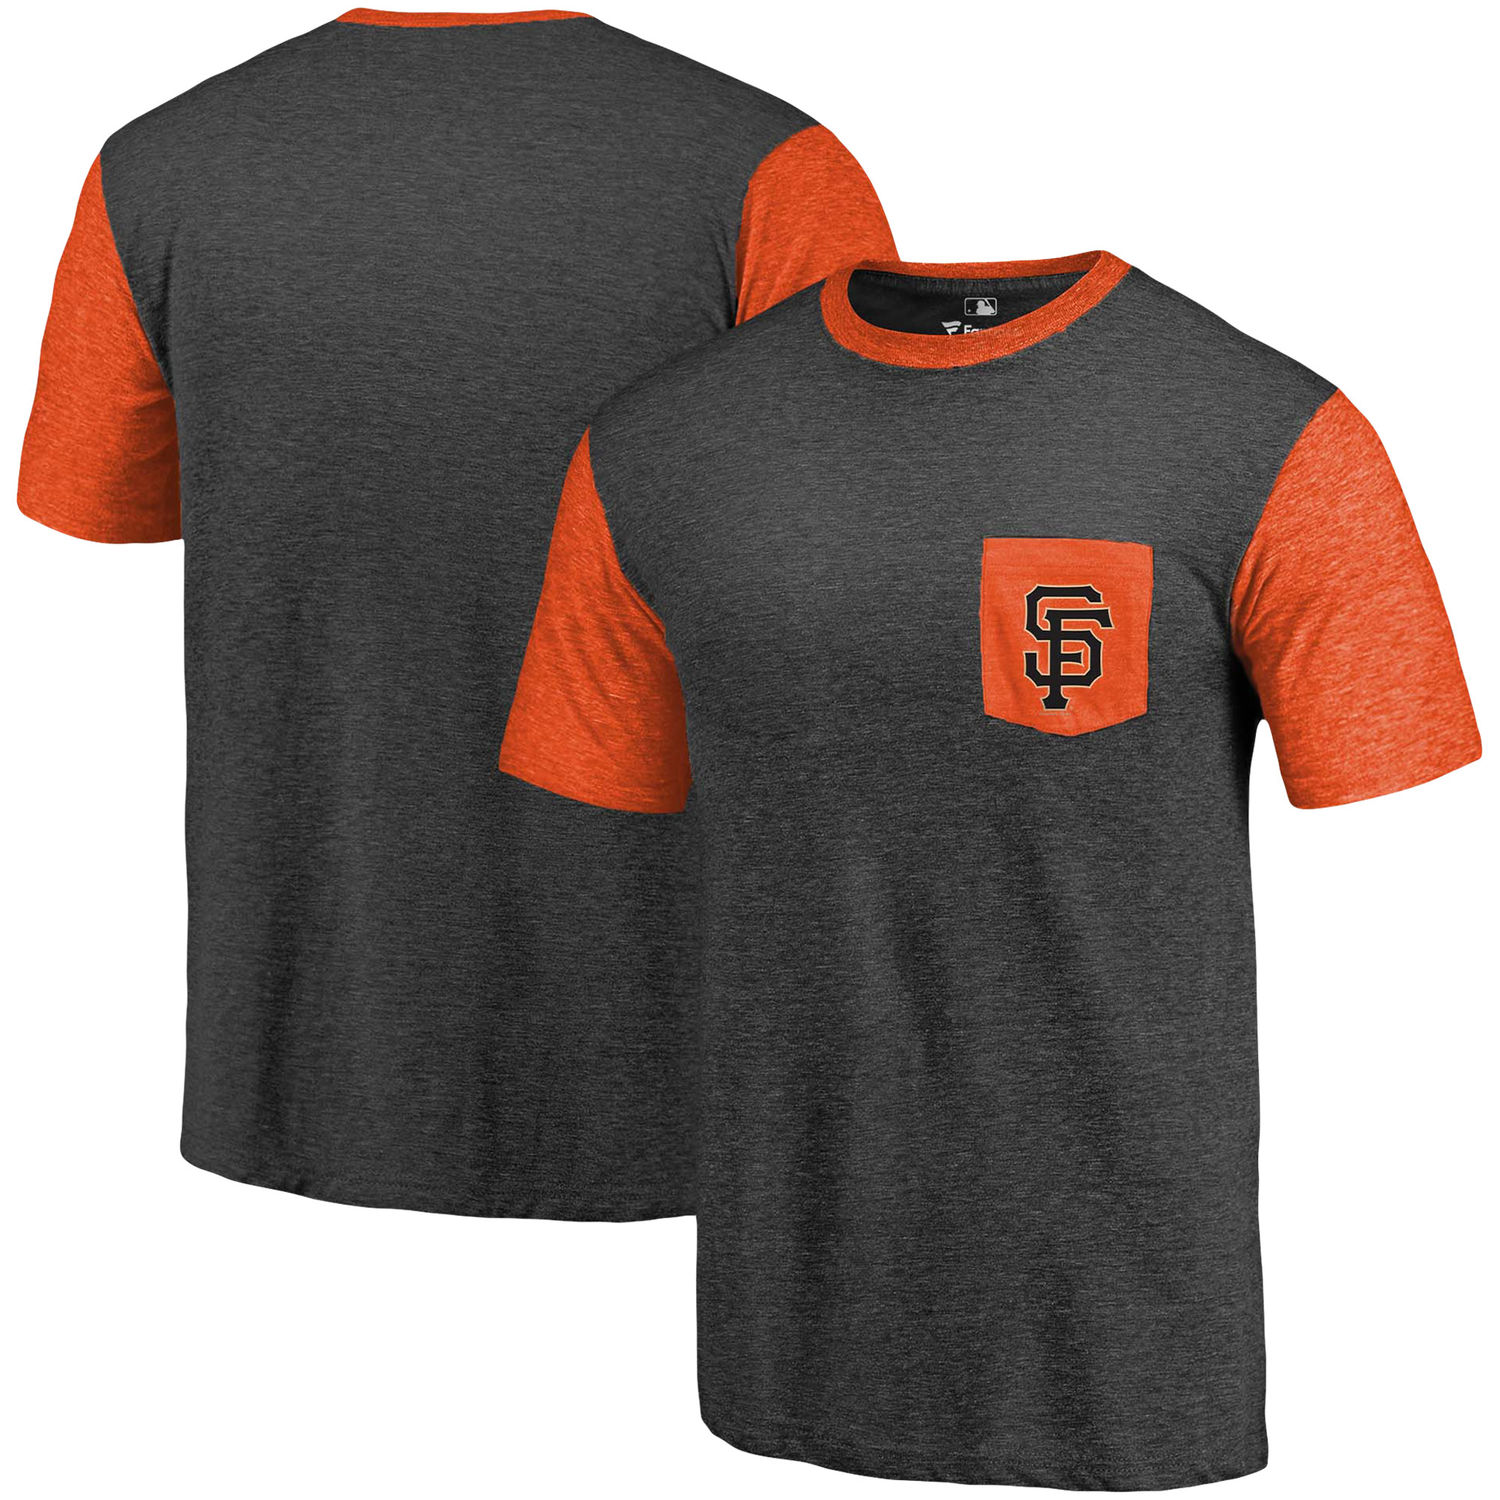 Men's San Francisco Giants Fanatics Branded Black/Orange Refresh Pocket T-Shirt